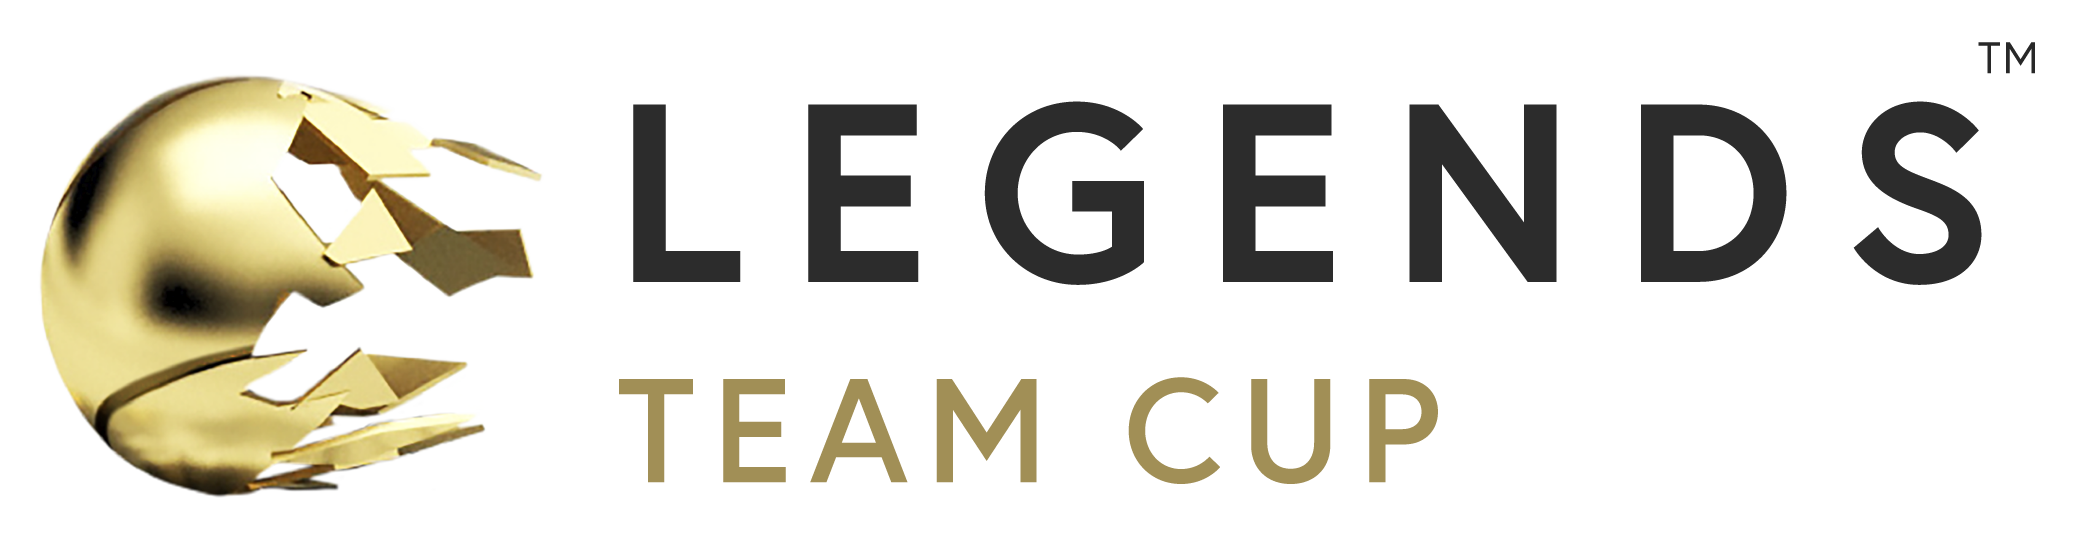 Legends Team Cup - Route to Dubai